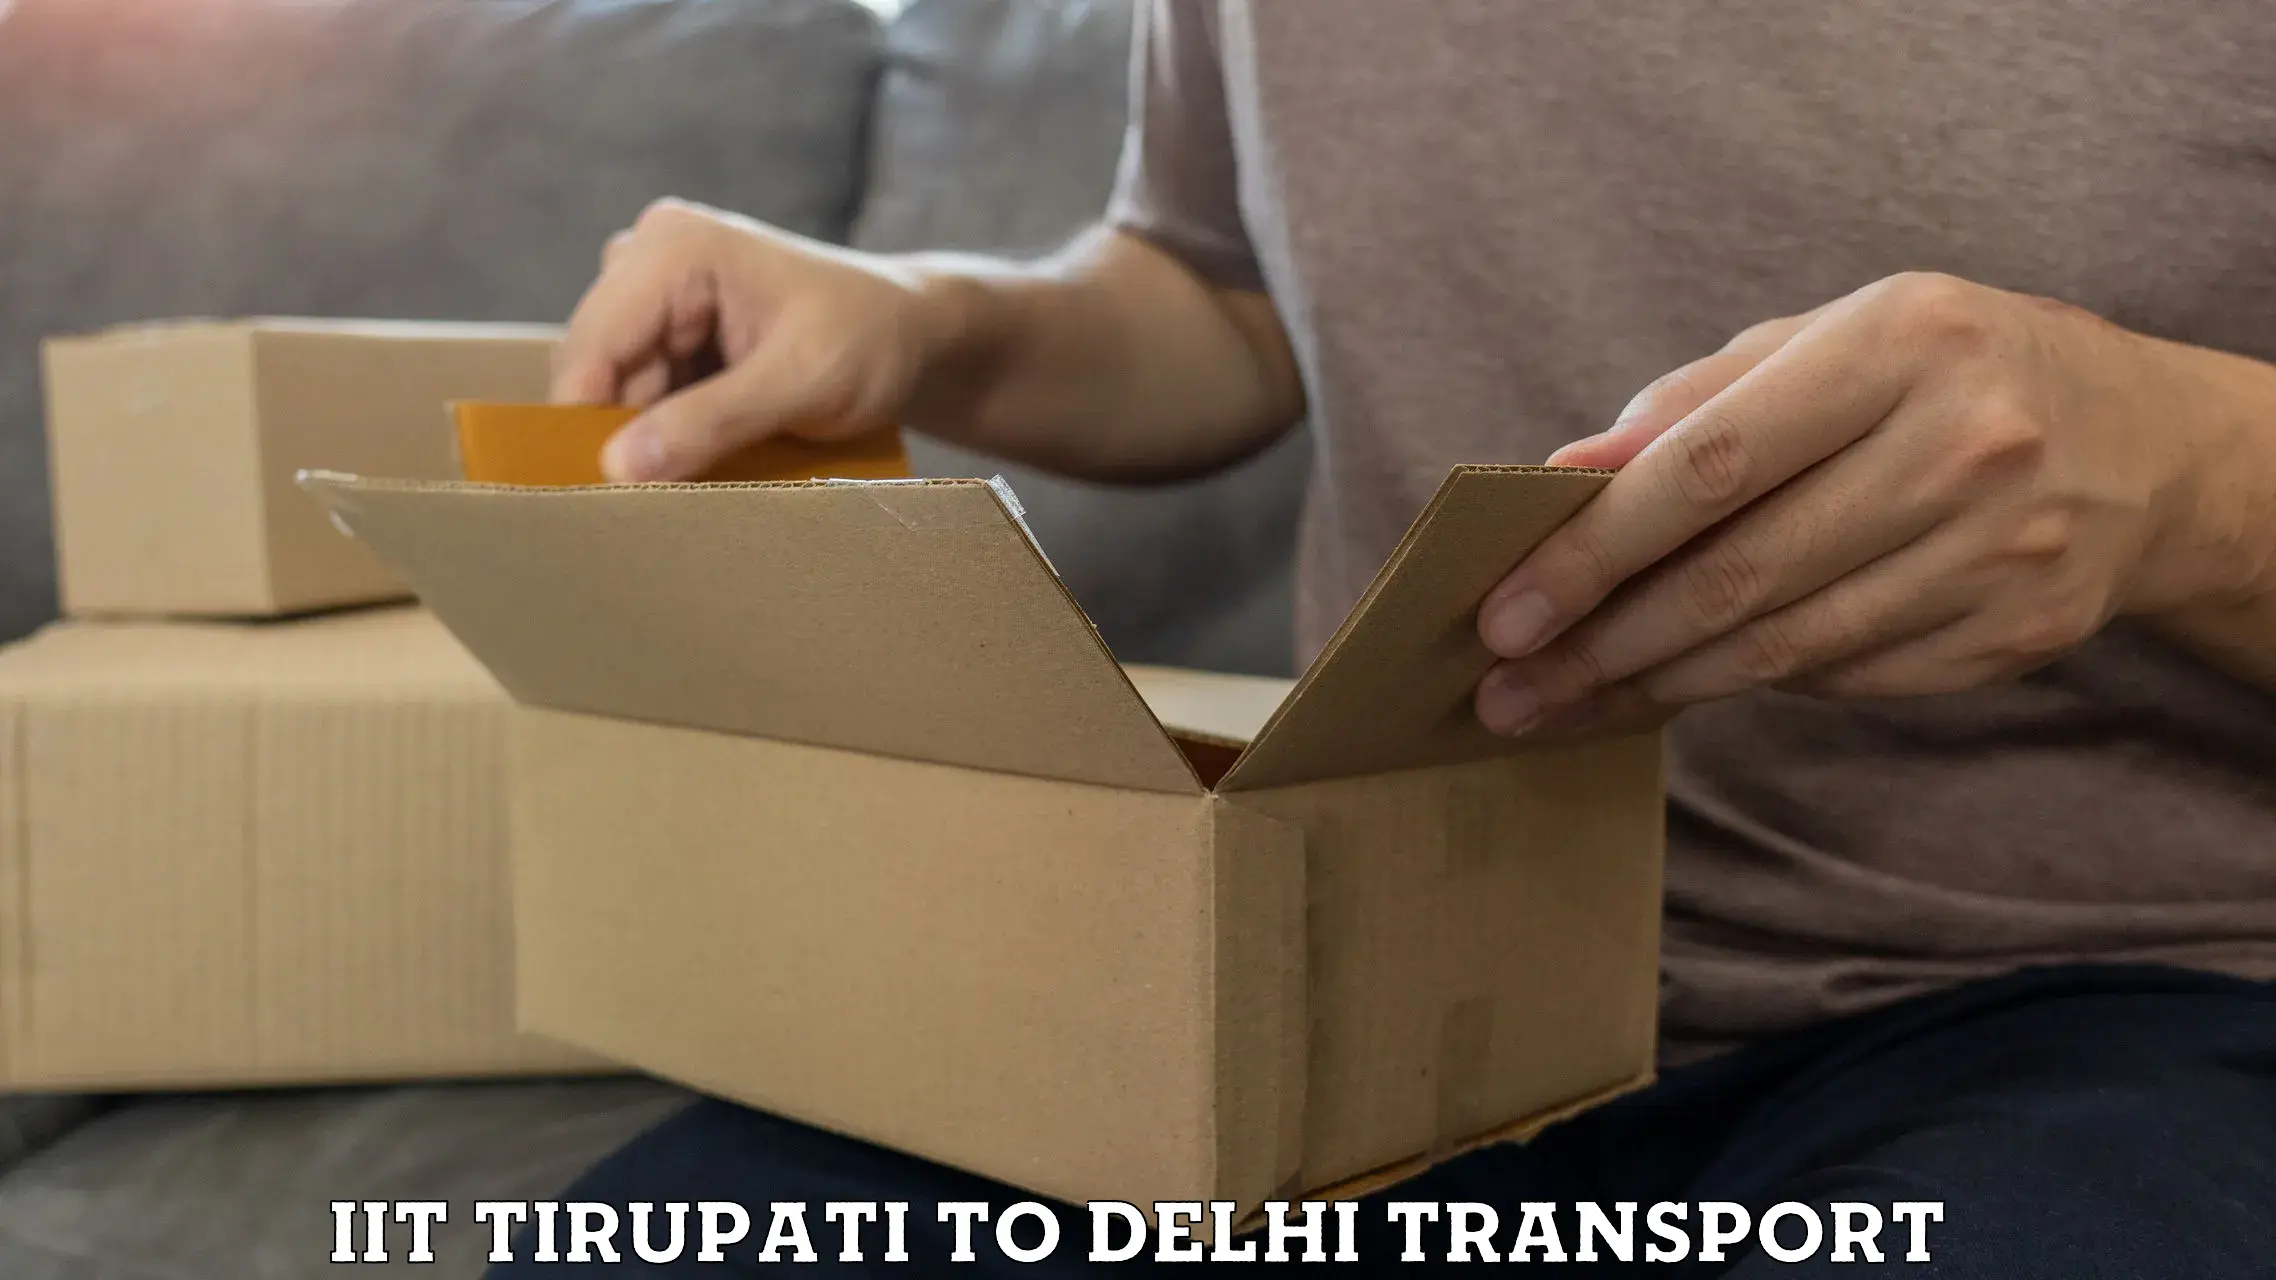 Transport in sharing IIT Tirupati to NCR